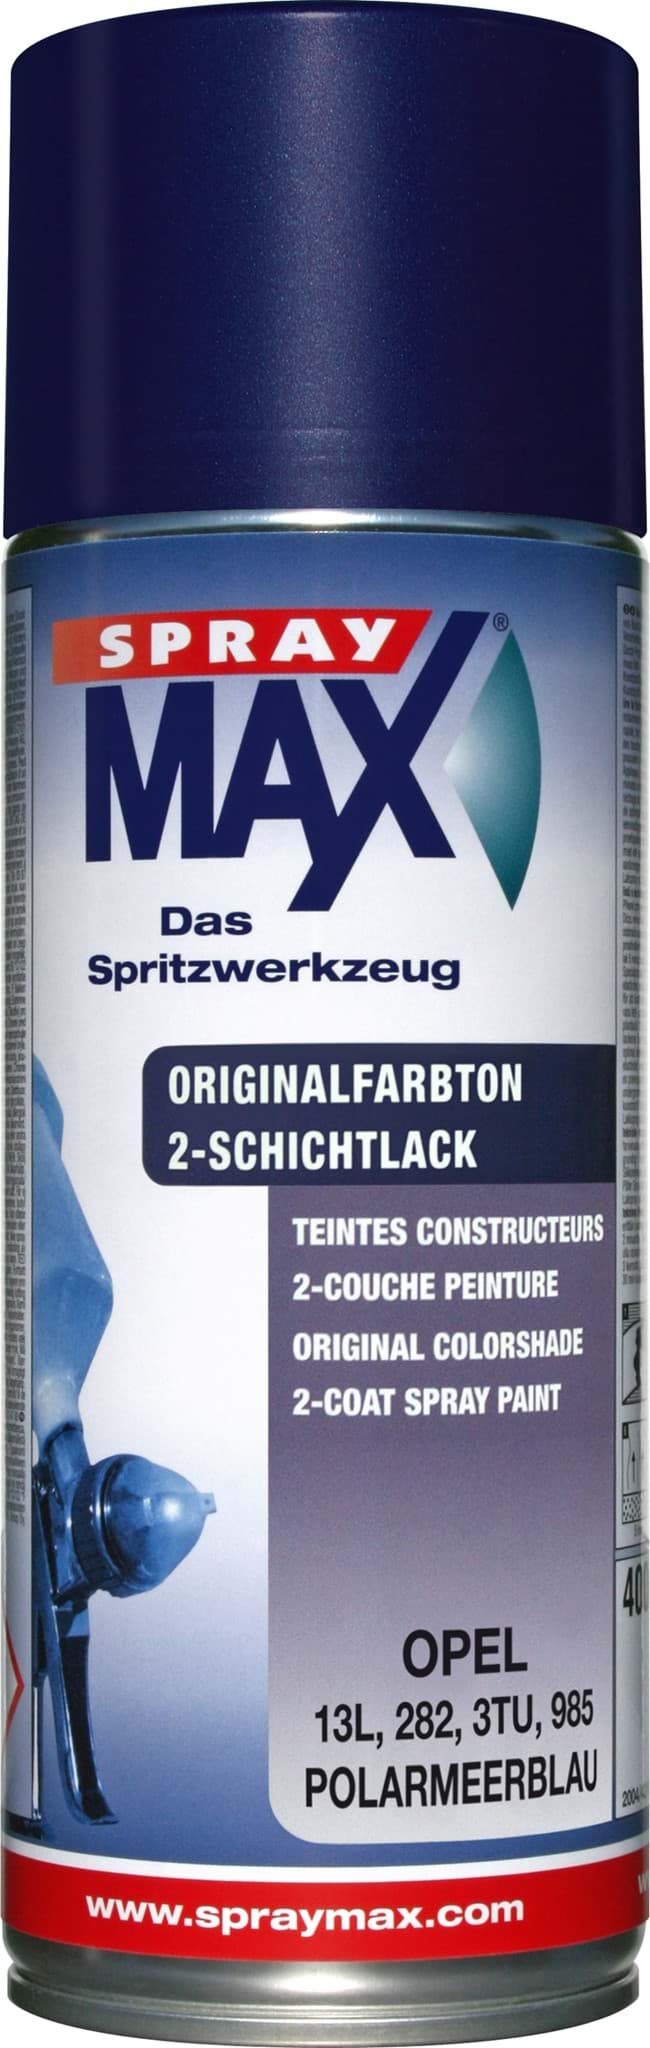 Afbeelding van SprayMax Originalfarbton für Opel 282 polarmeerblau